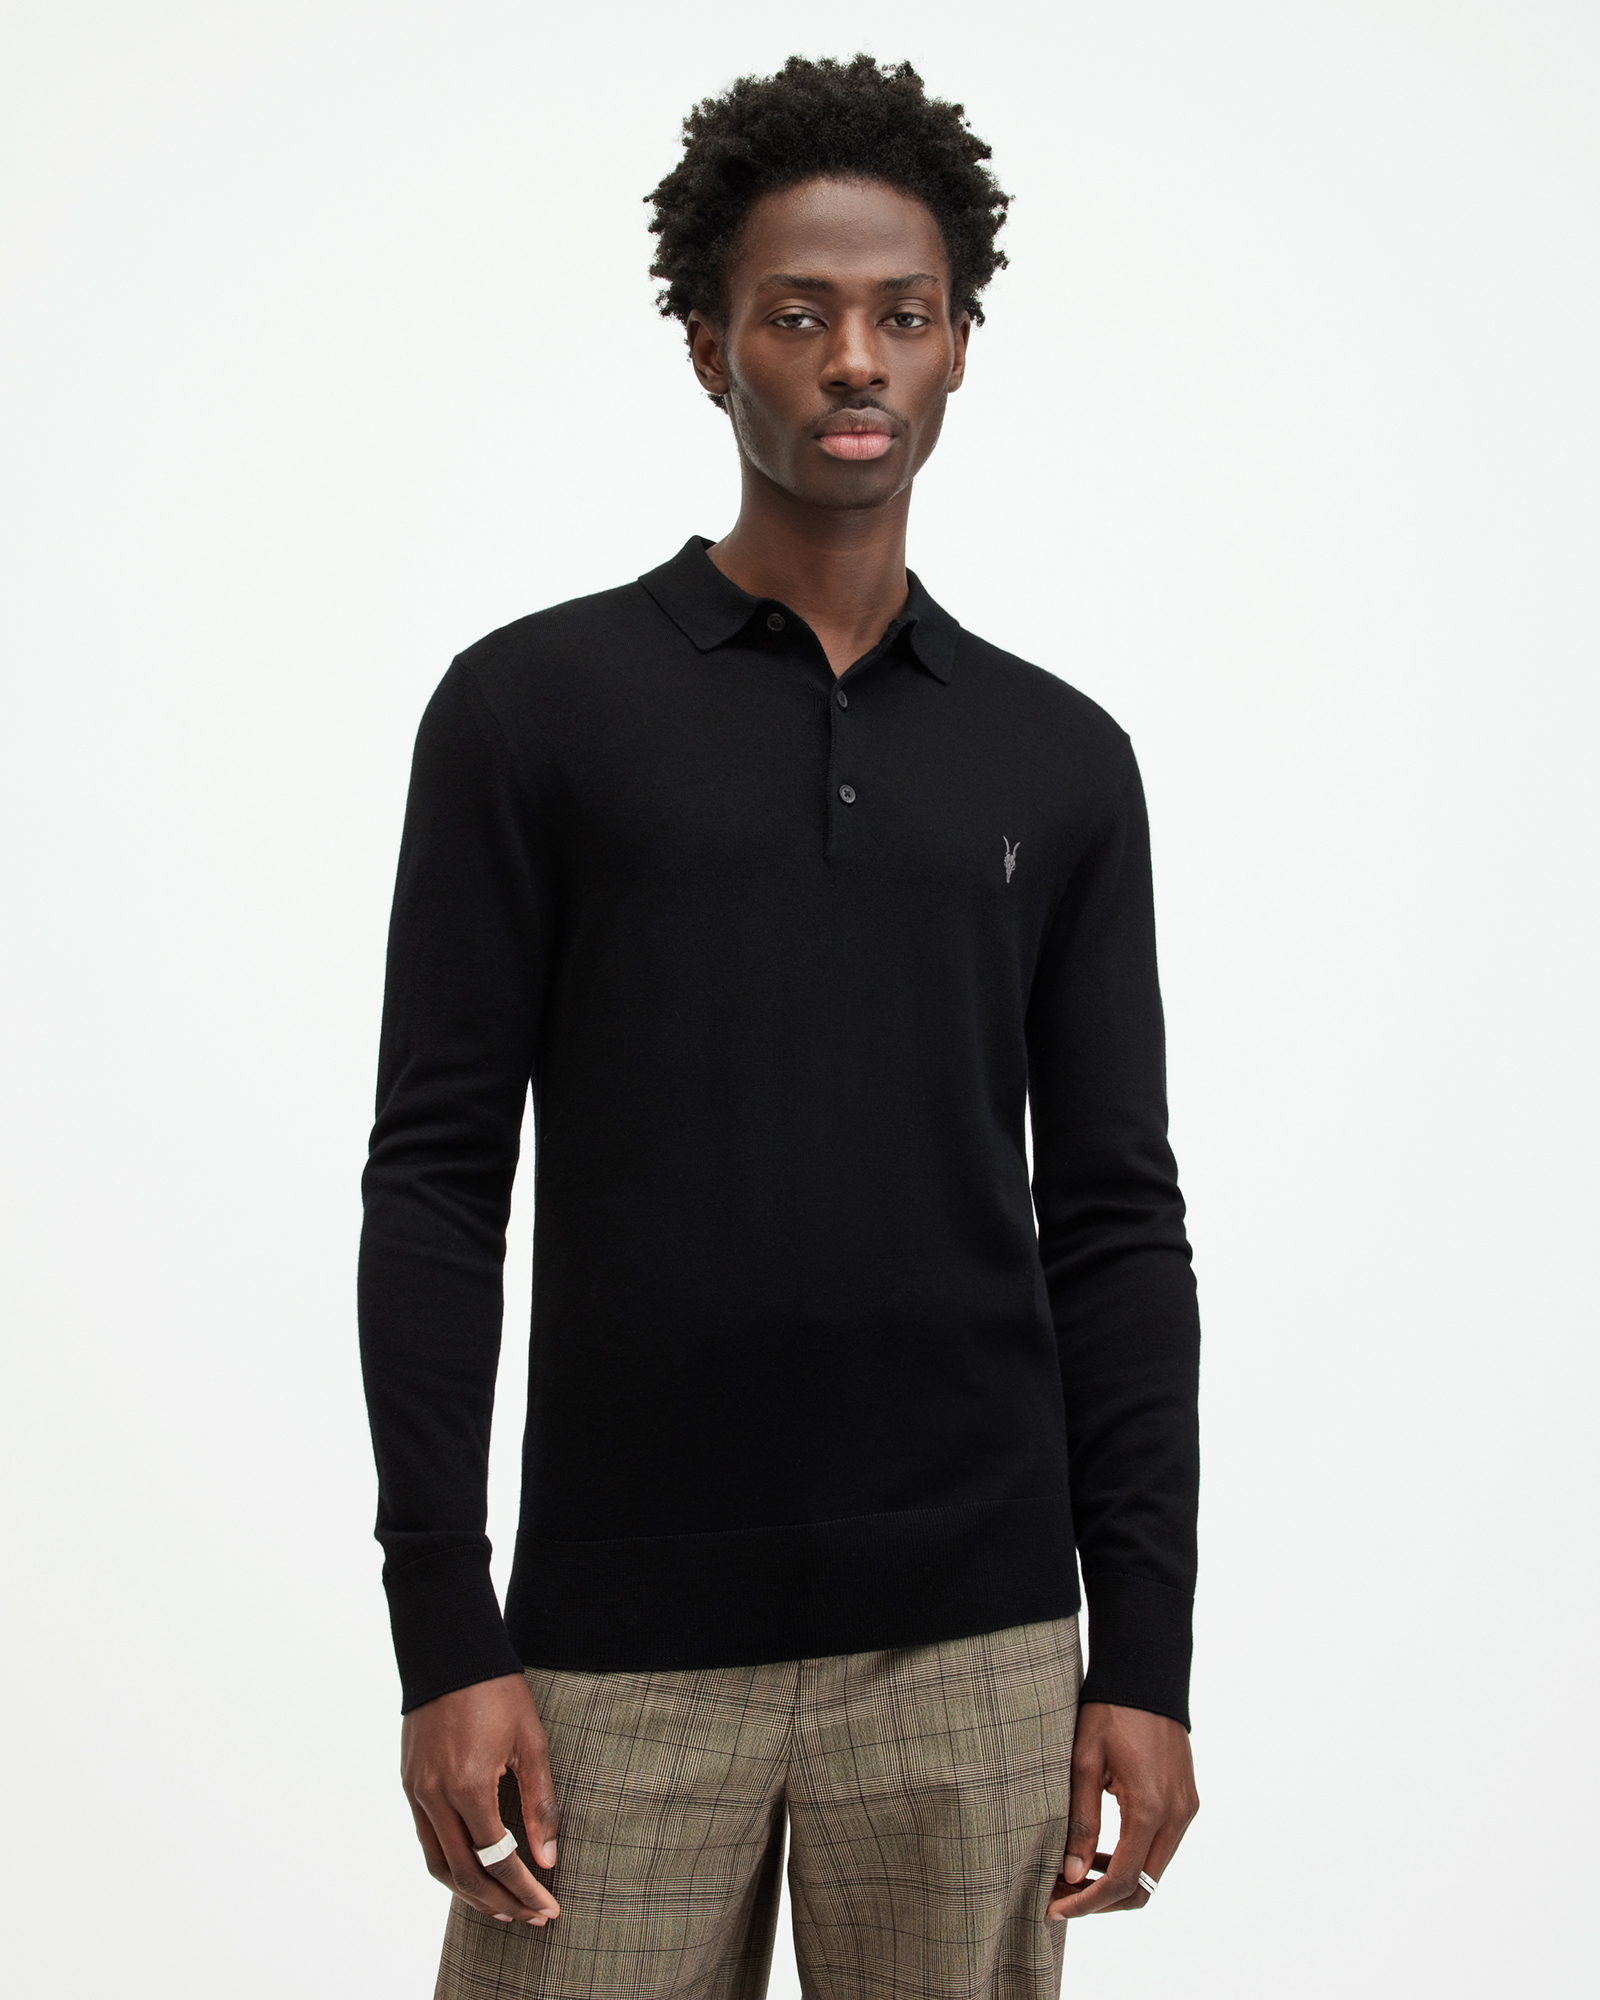 AllSaints Men's Merino Wool Lightweight Slim Fit Mode Long Sleeve Polo Shirt, Black, Size: XS